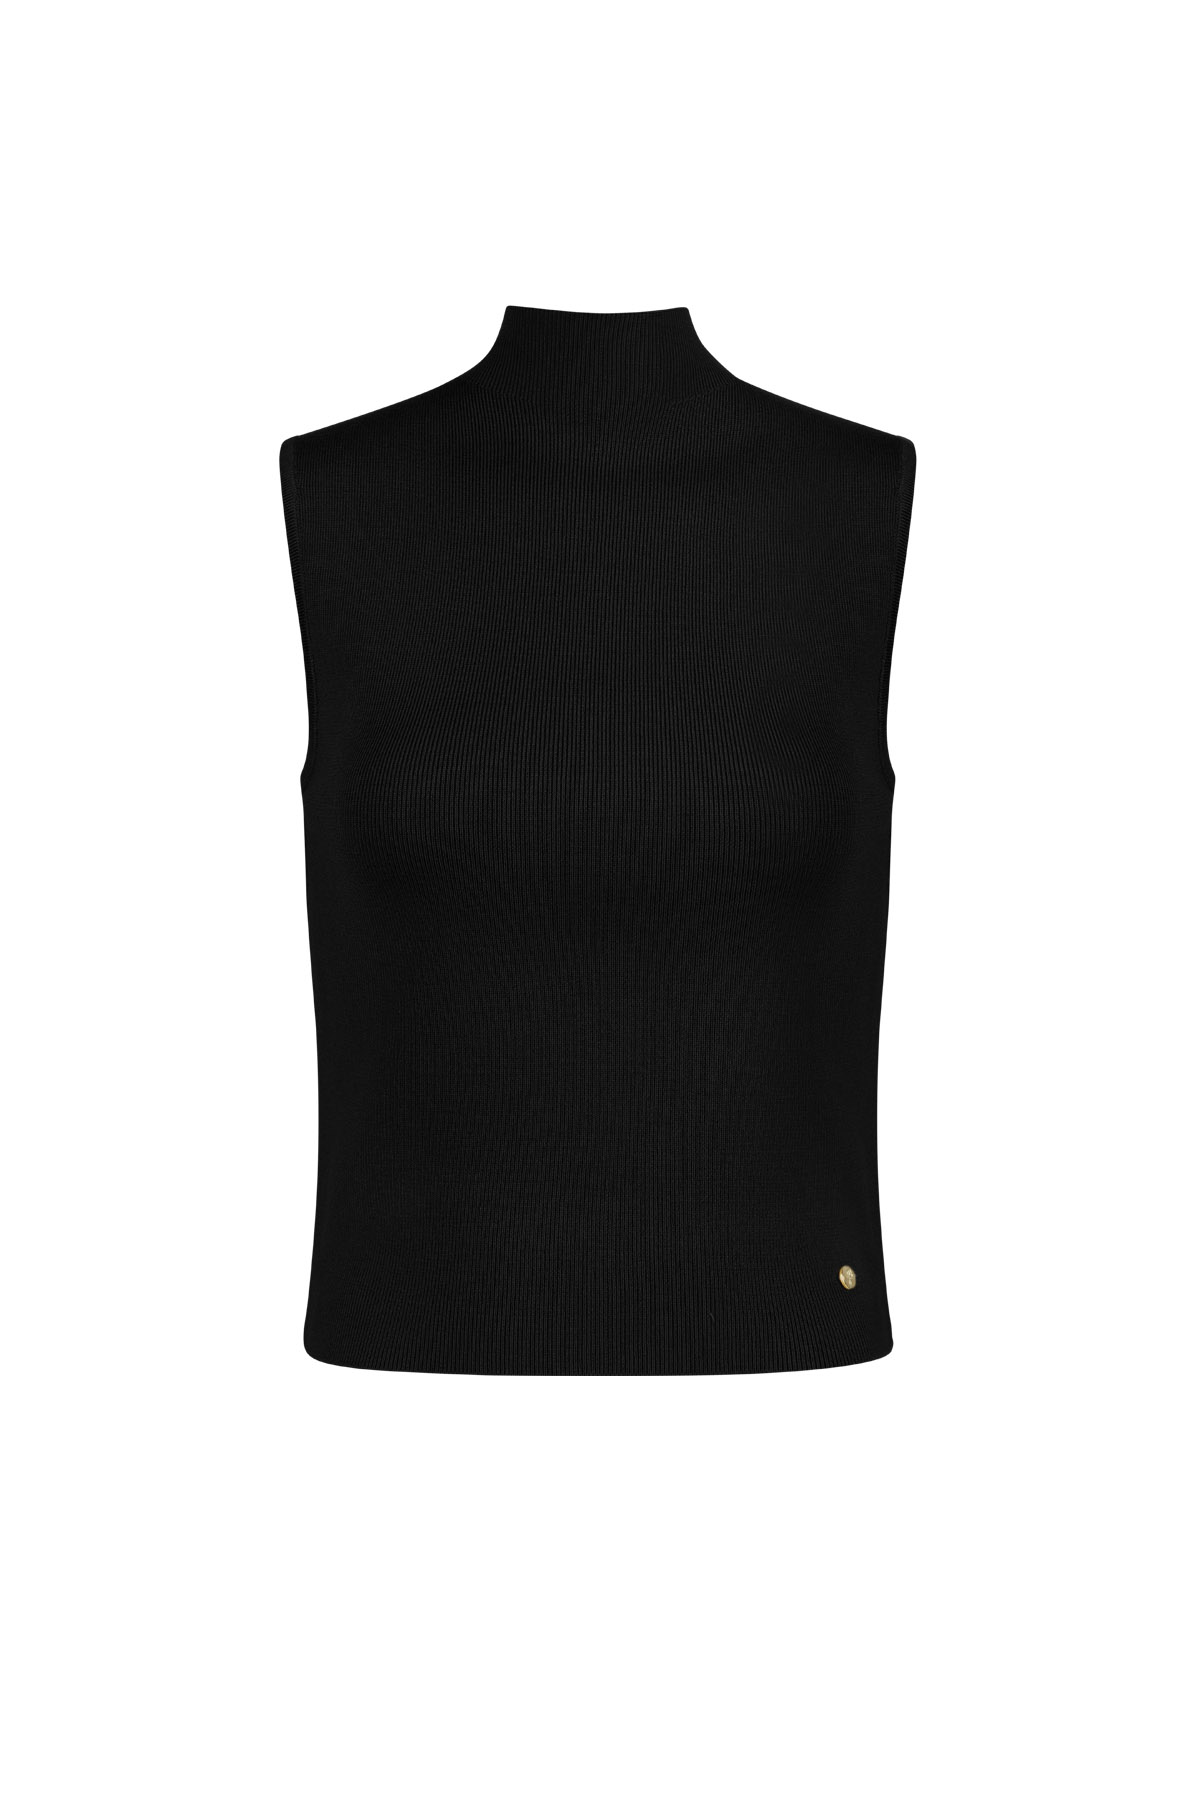 Sleeveless top with low collar small/medium – black h5 